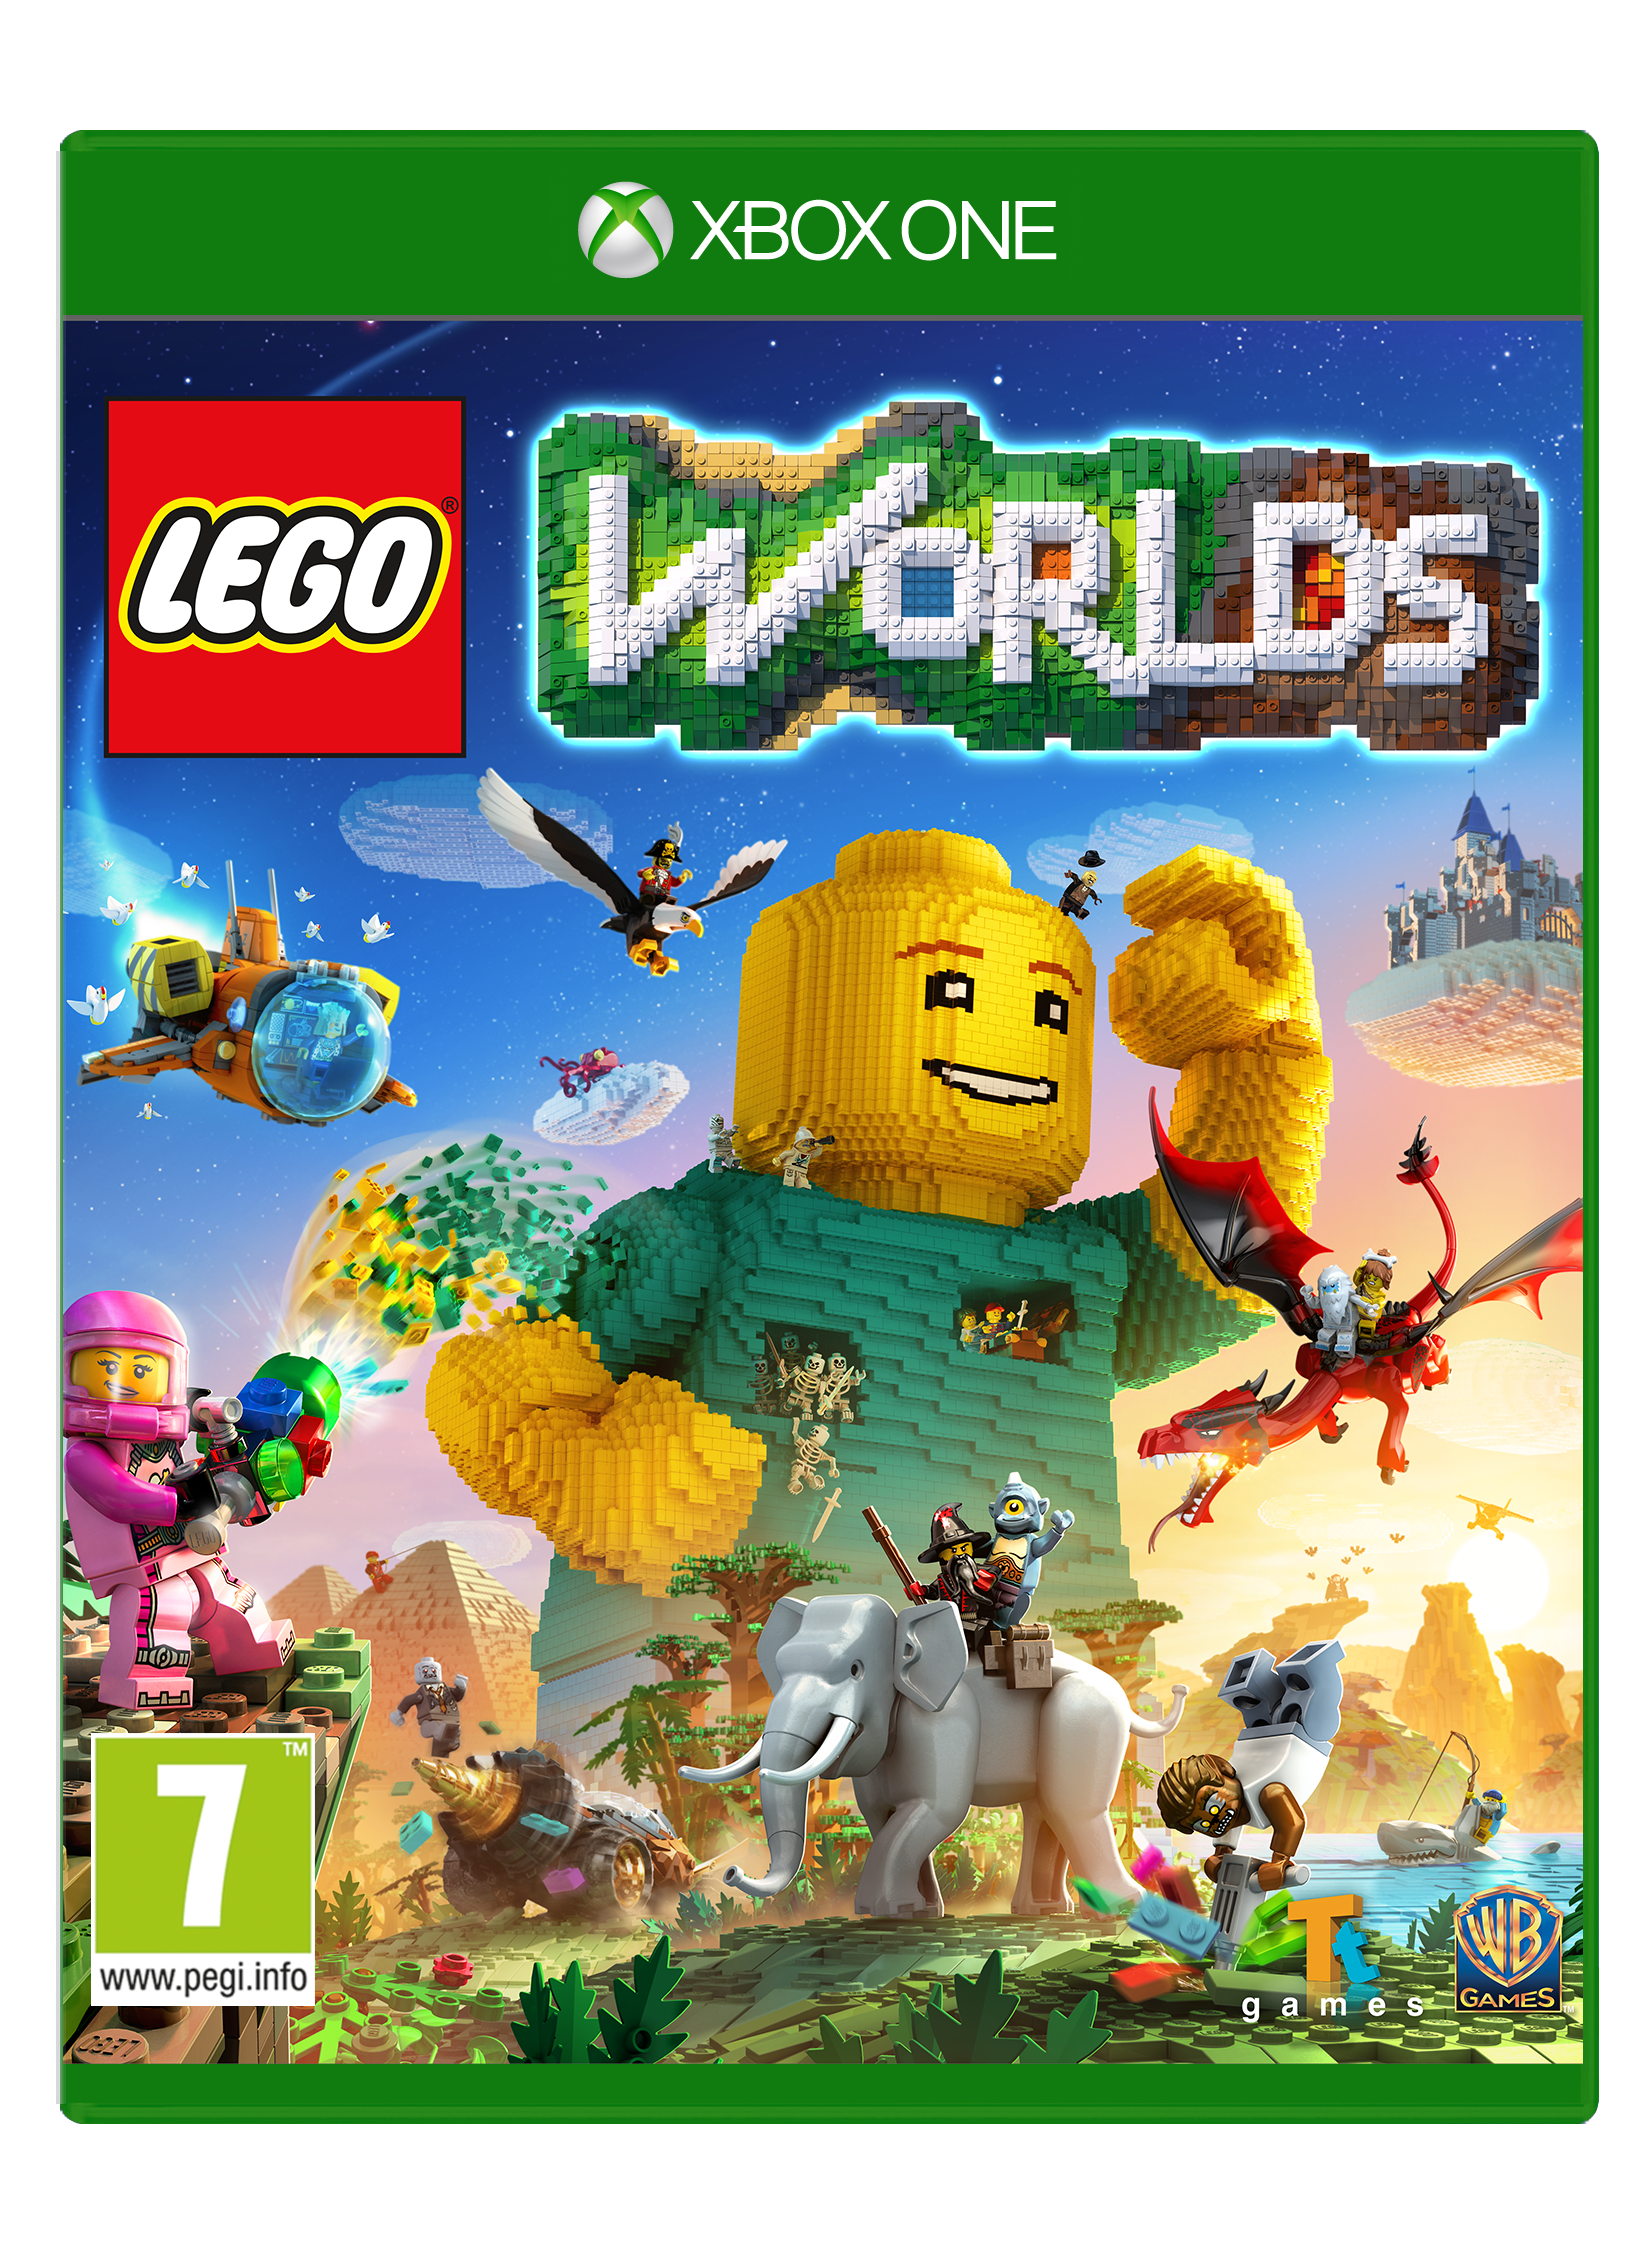 LEGO Worlds - Xbox One